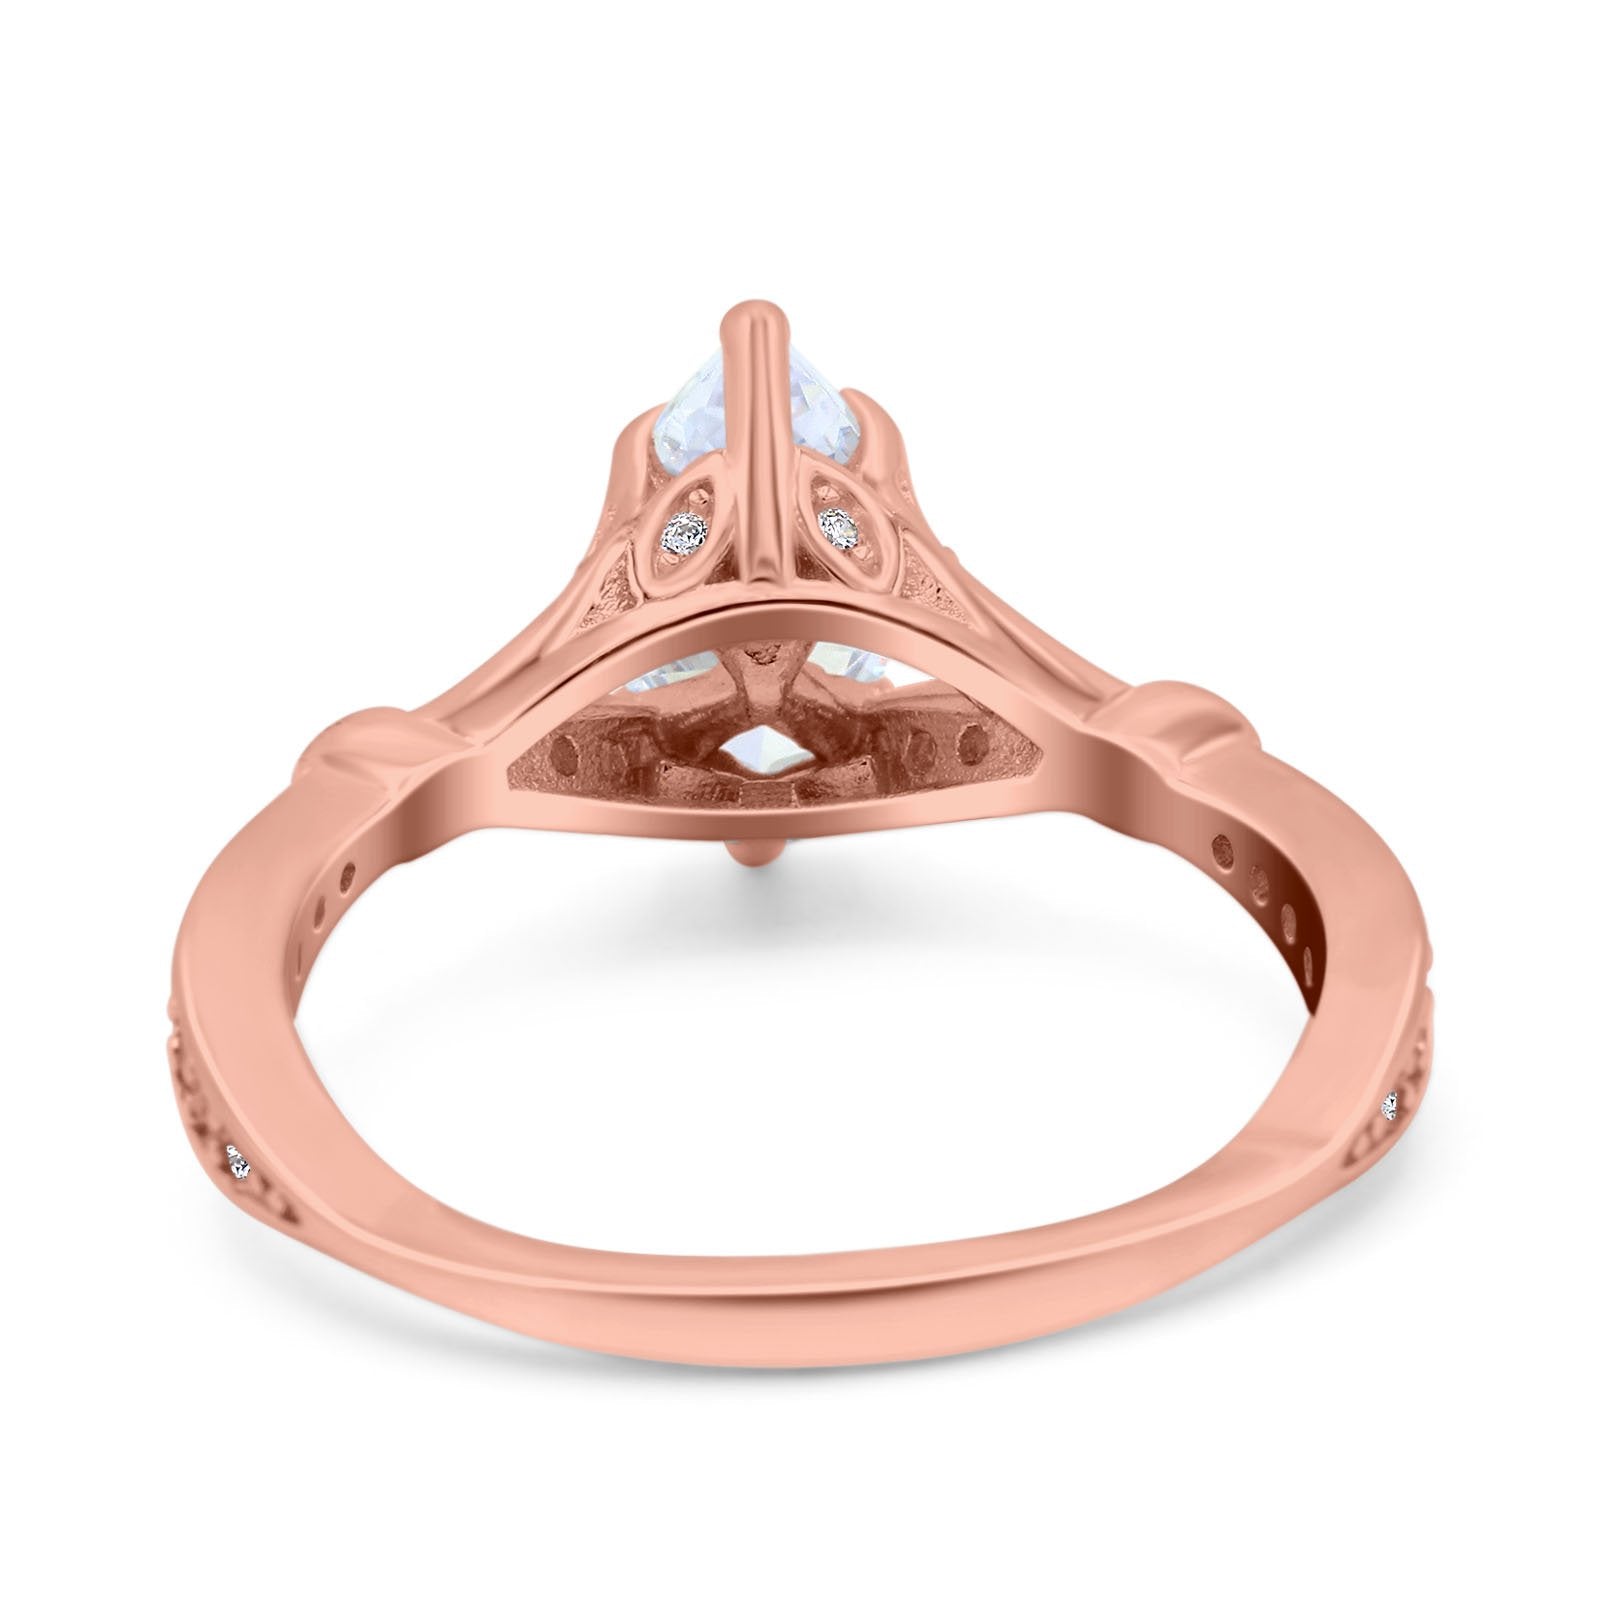 14K Gold Marquise Shape Art Deco Simulated Cubic Zirconia Engagement Wedding Bridal Ring